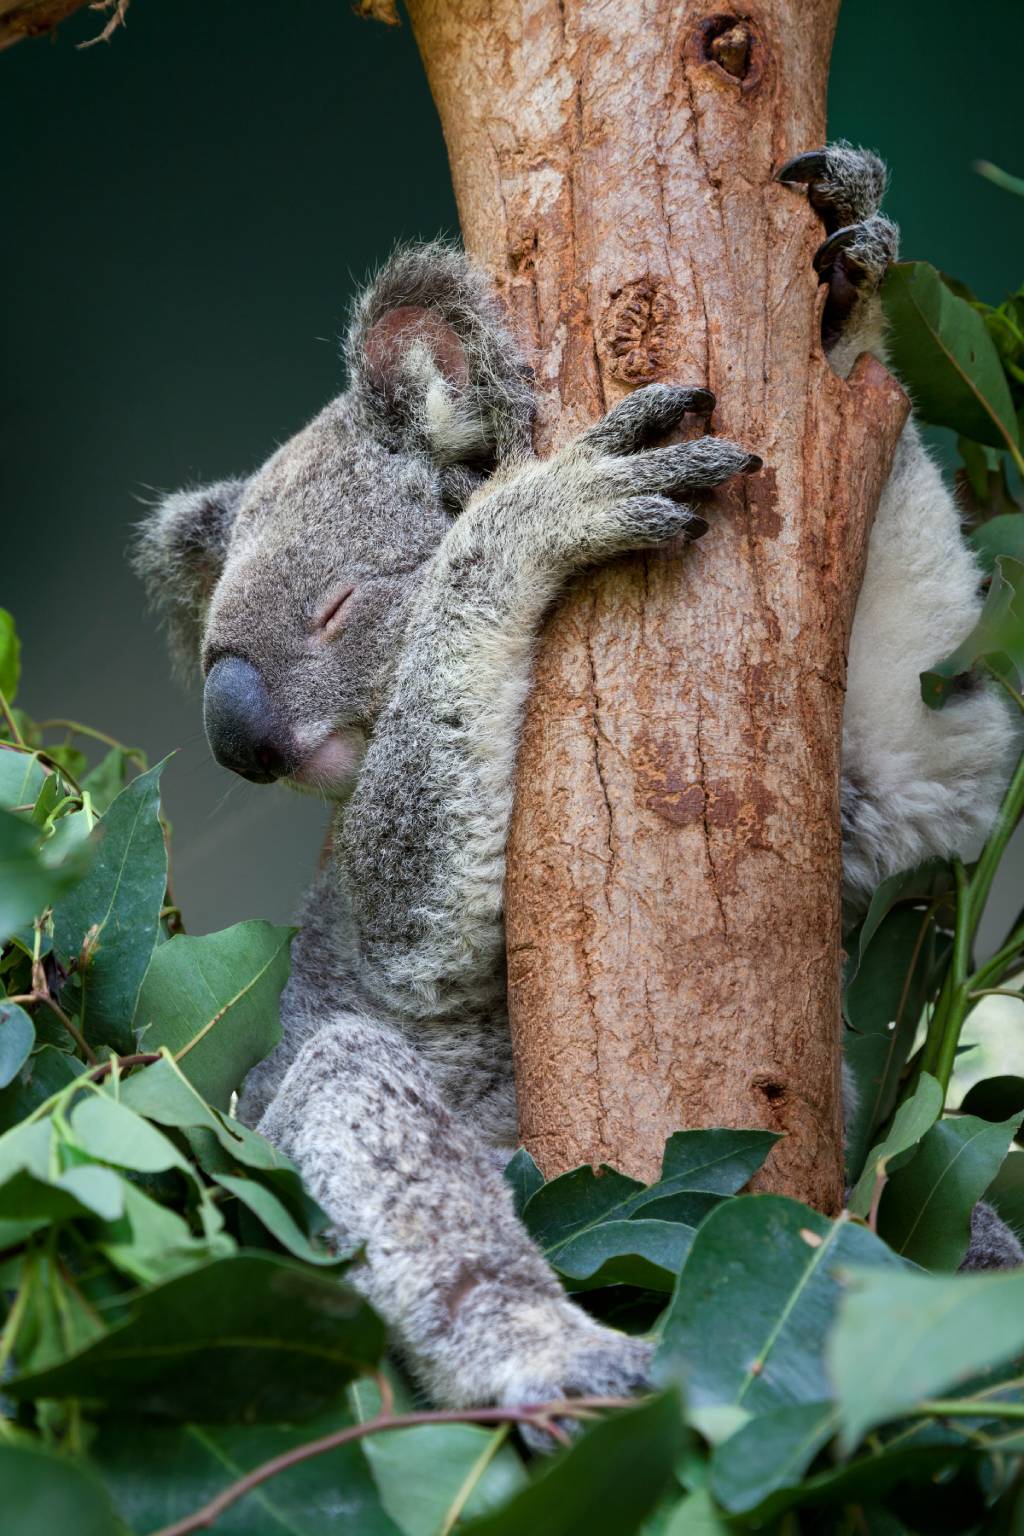 Koala hanging in the tree while sleeping